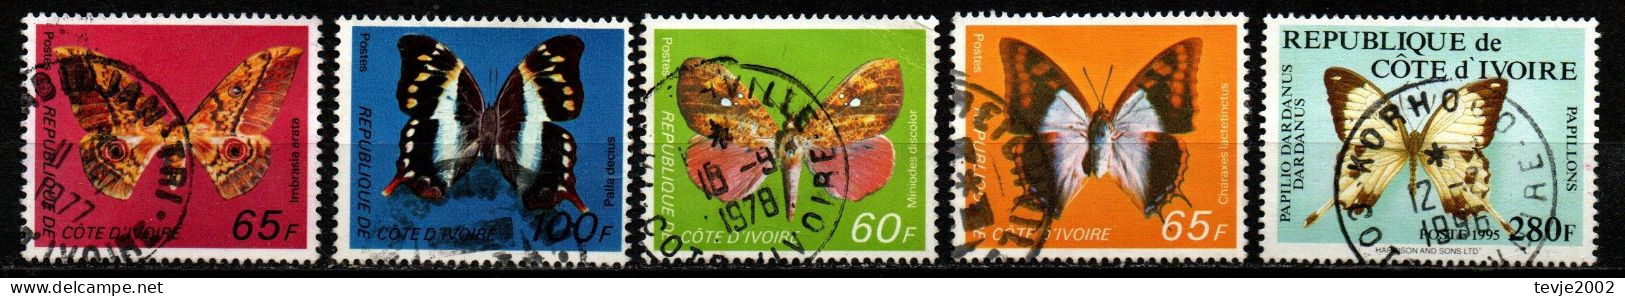 Cote D'Ivoire Elfenbeinküste - Lot Aus 1977 - 1995 - Gestempelt Used - Tiere Animals Schmetterlinge Butterflies - Butterflies